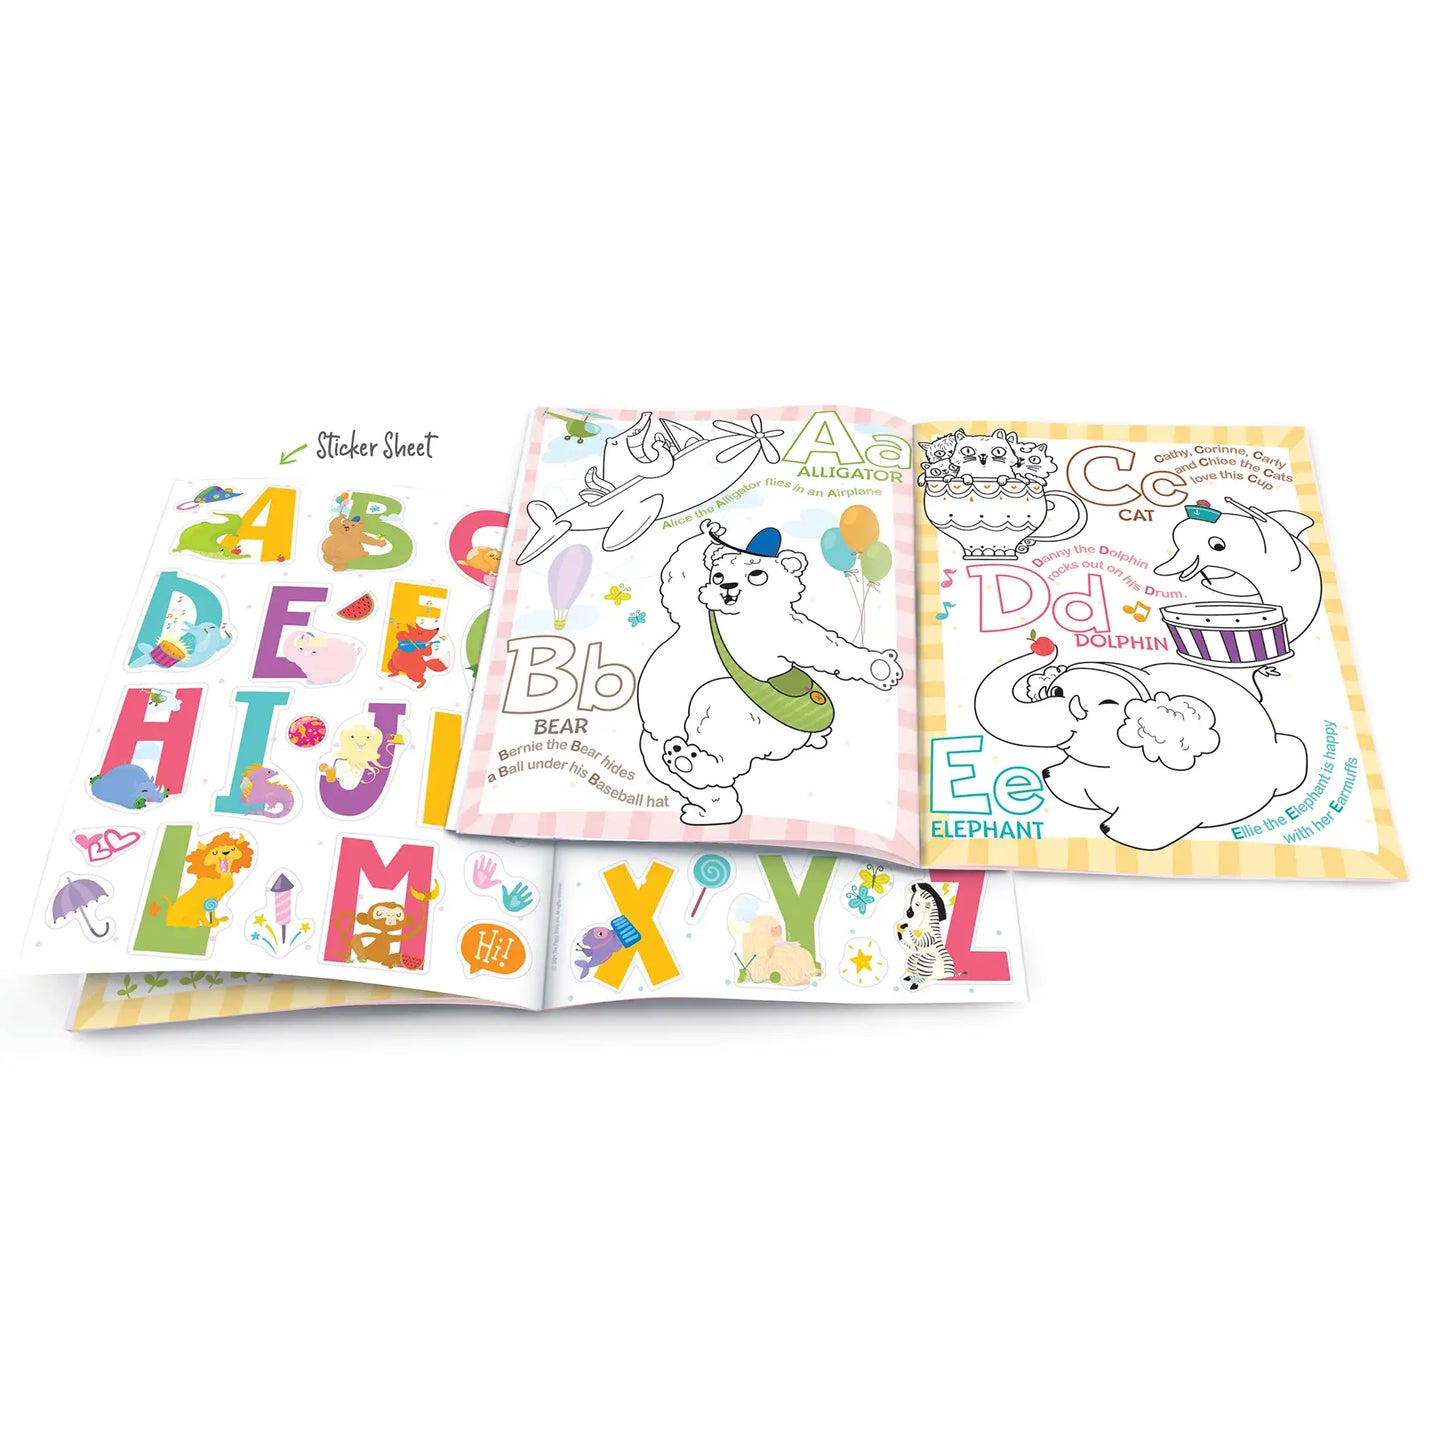 Animal ABC’s Dry Erase Coloring Book